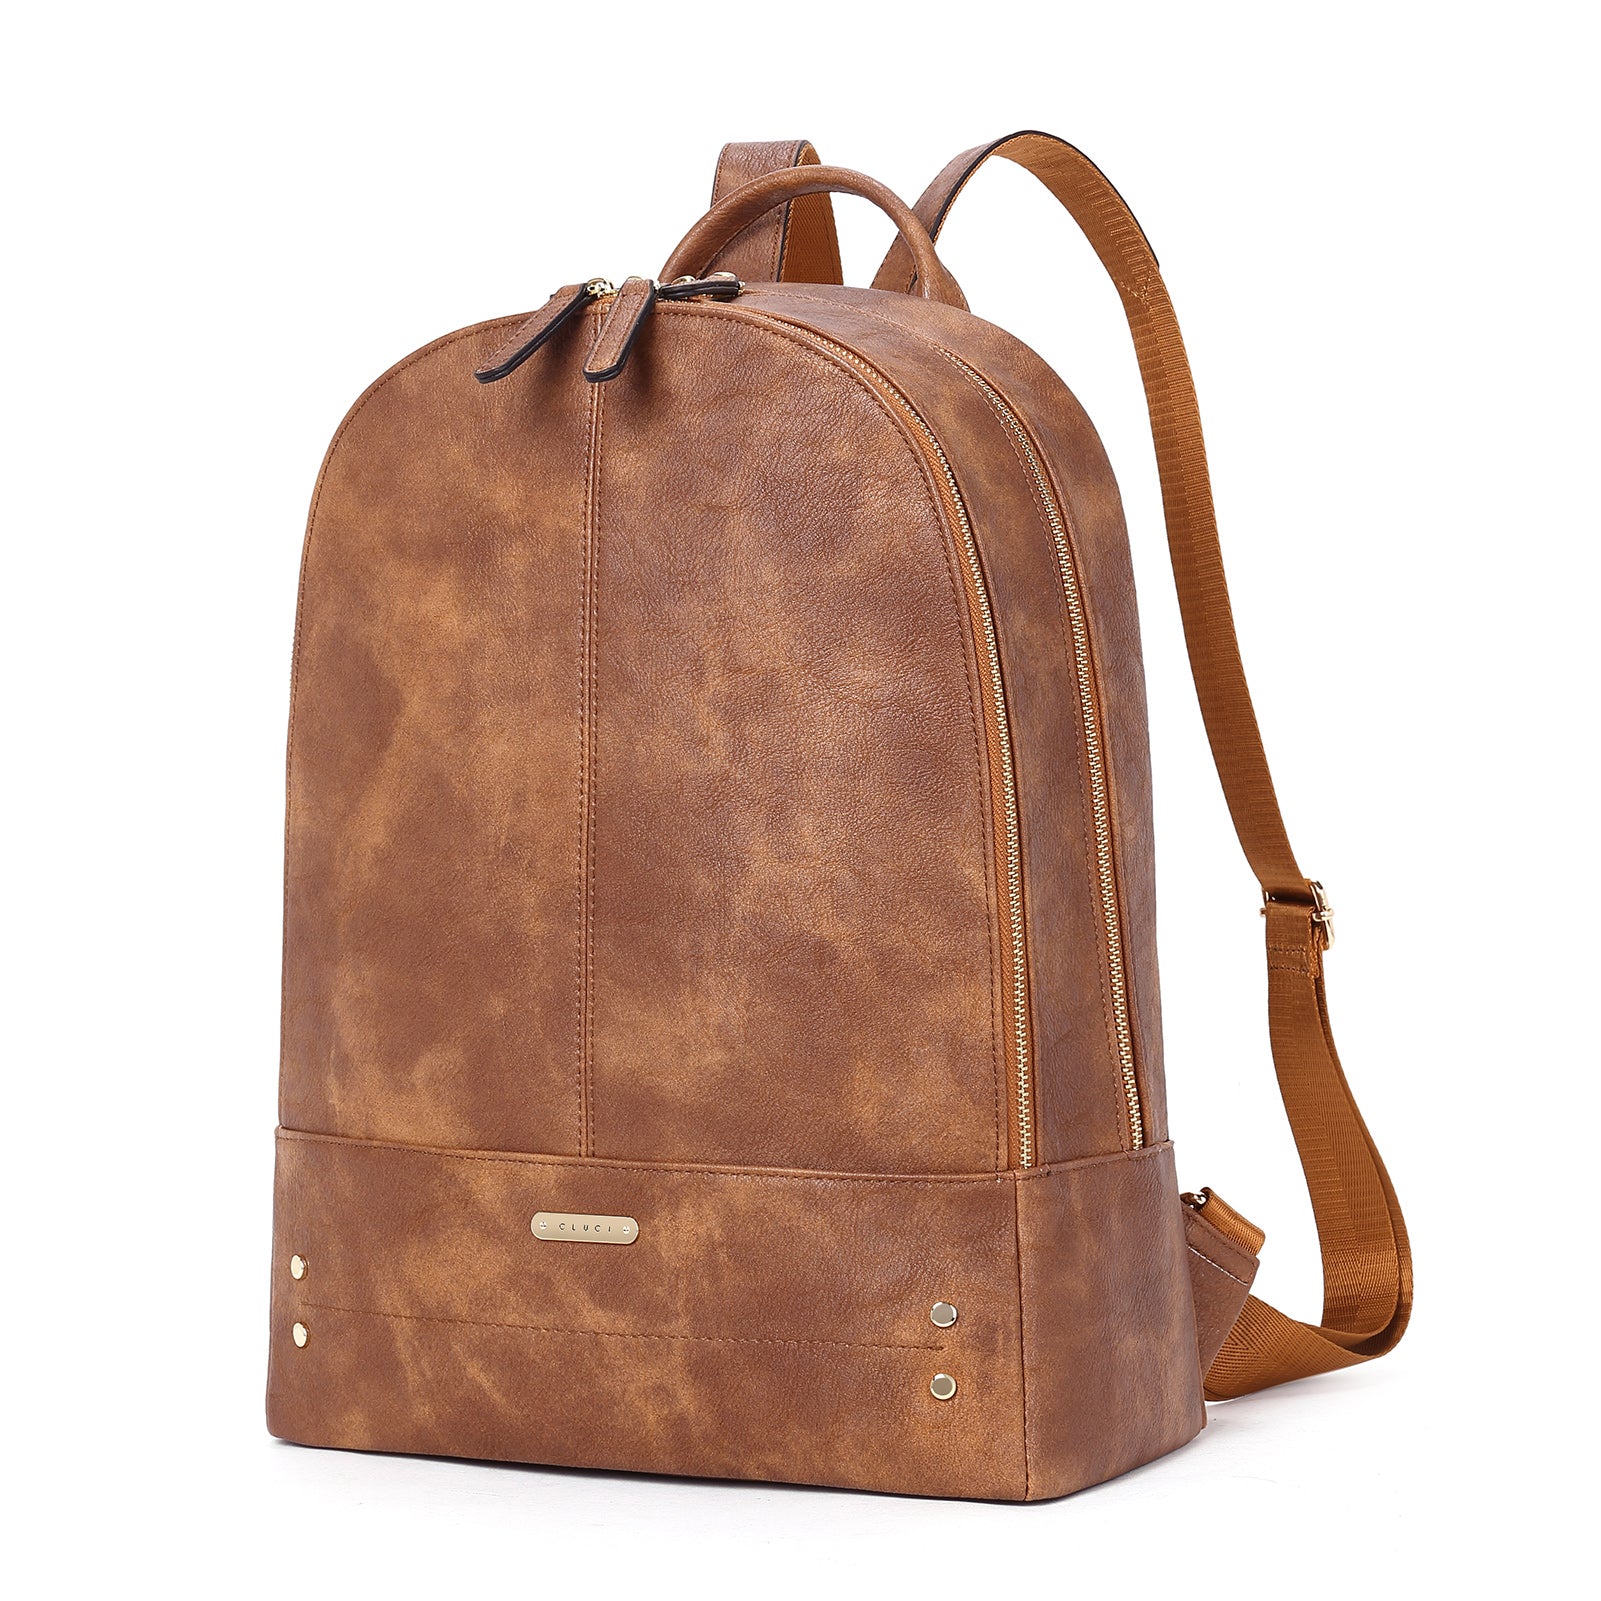 CLUCI Laptop Backpack for Women Leather 15.6 inch Computer Backpack Travel Vintage Large College Bag